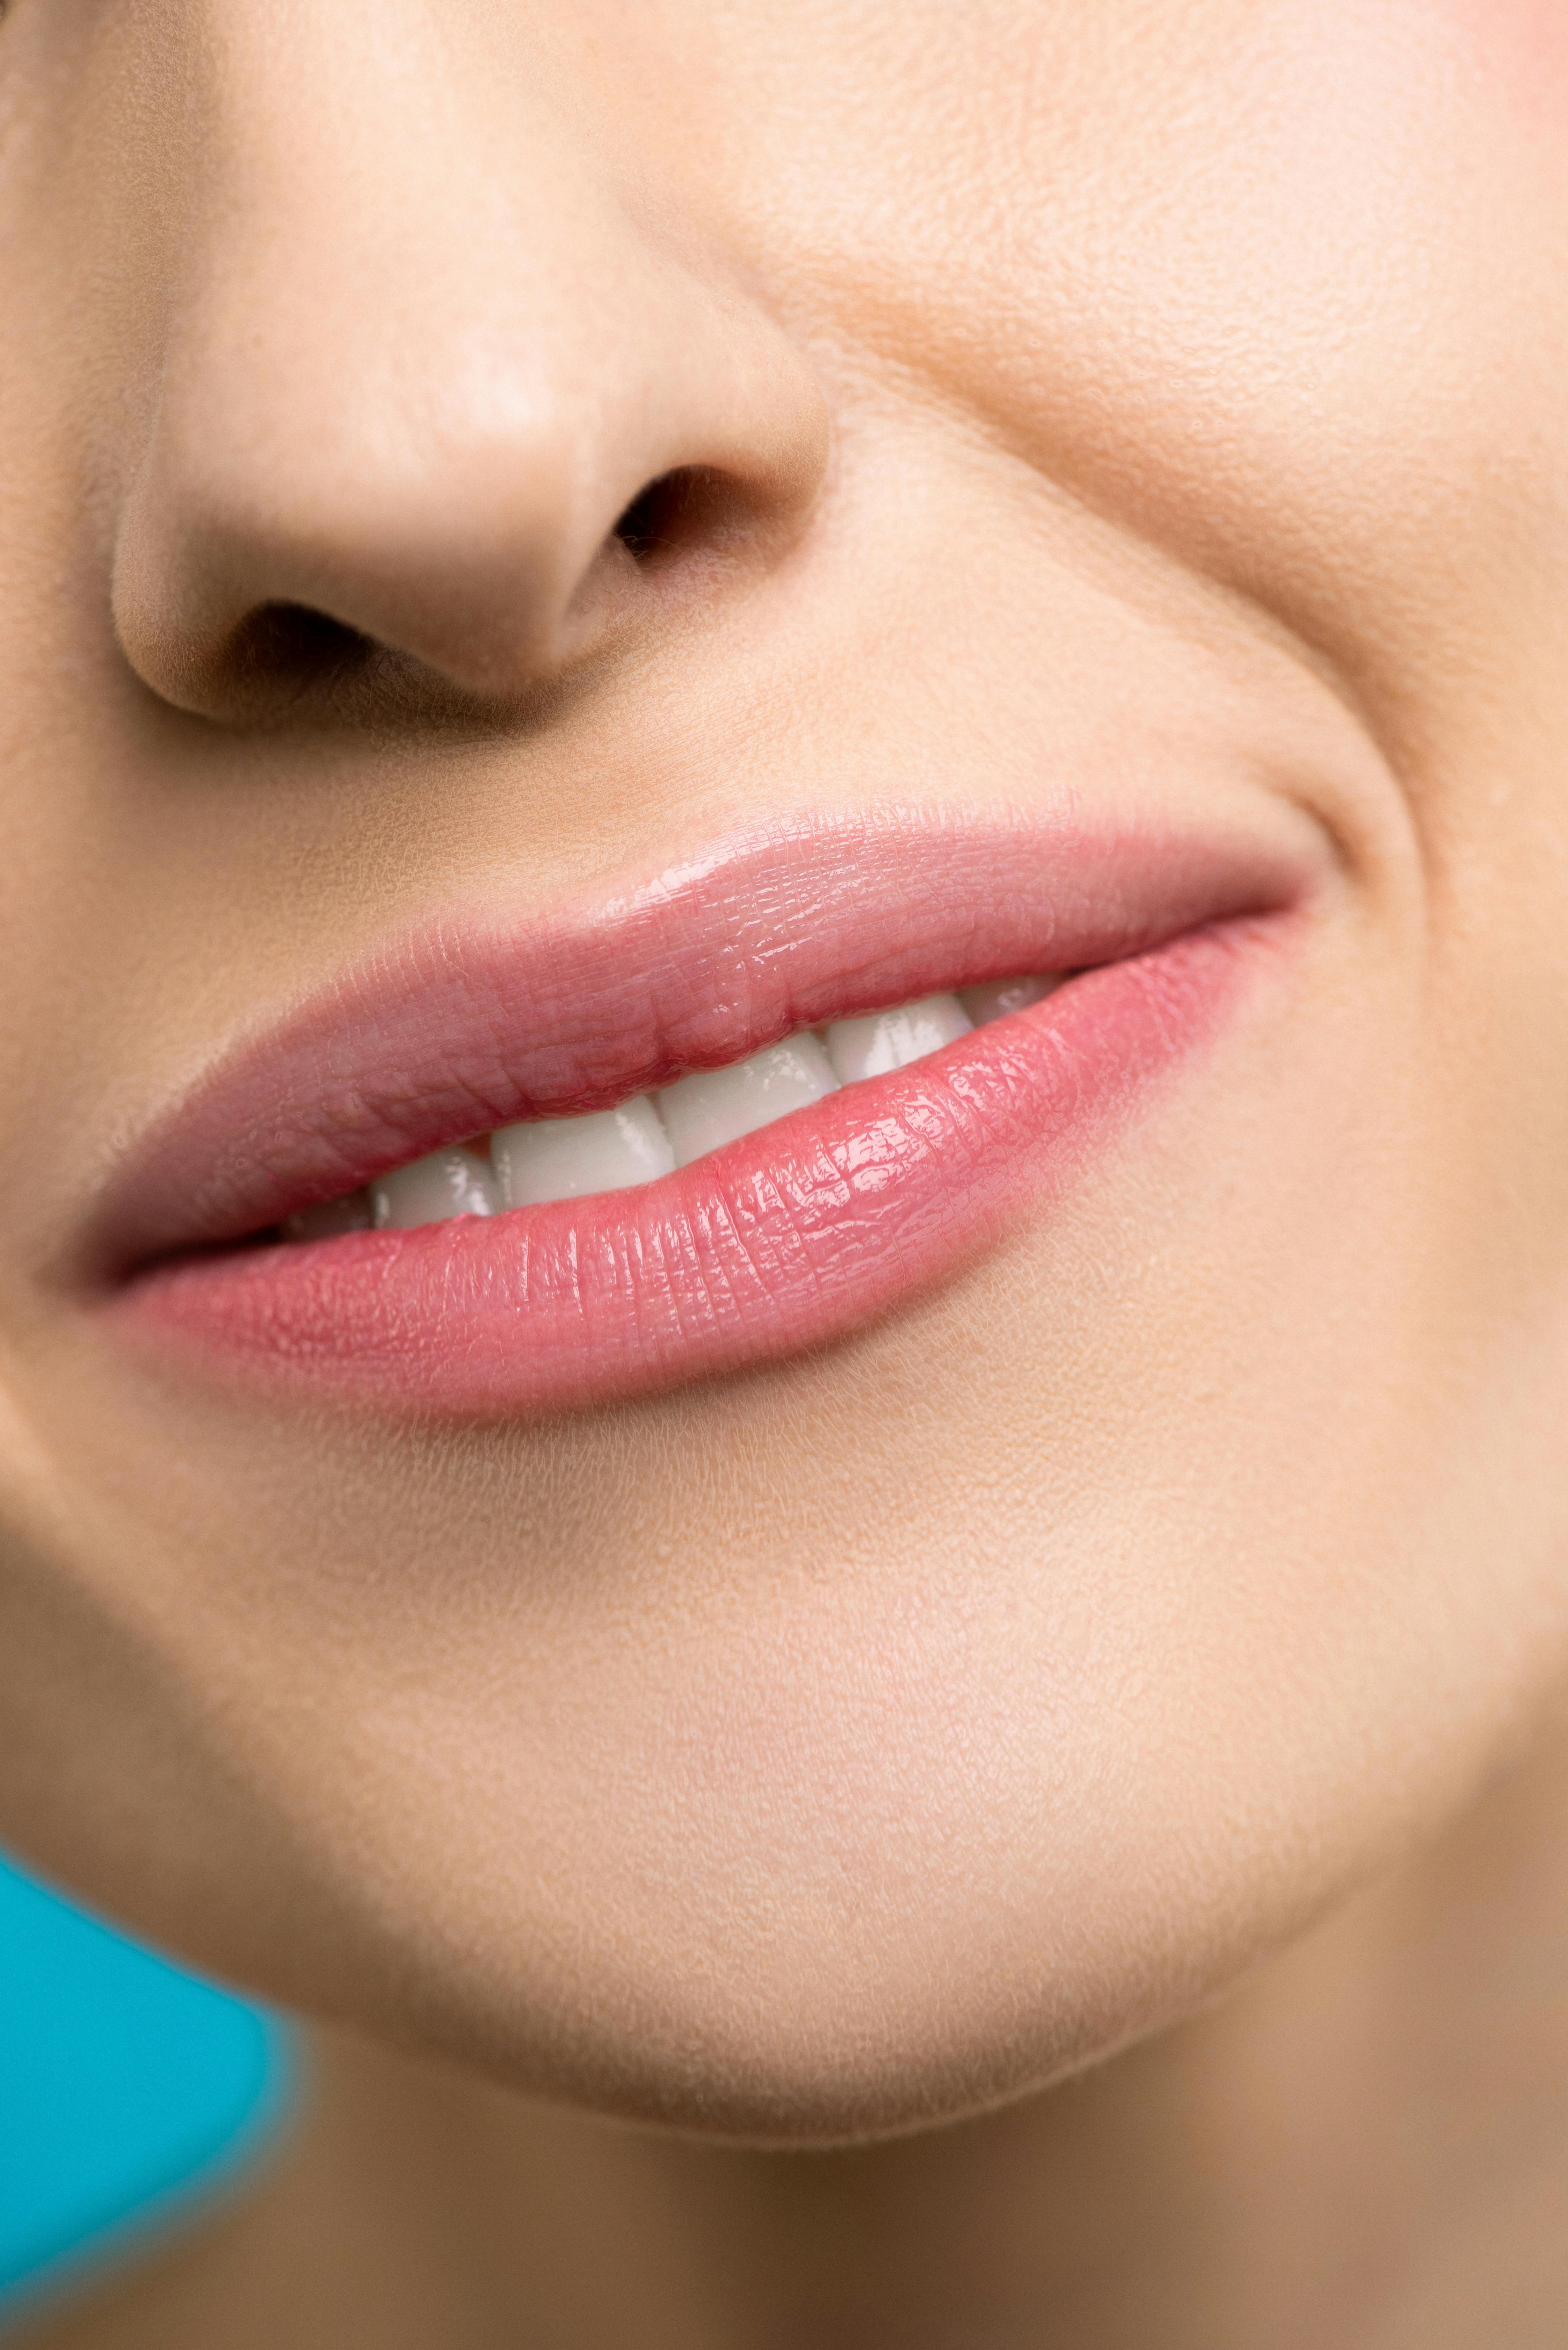 Woman in Red Lipstick Smiling \u00b7 Free Stock Photo